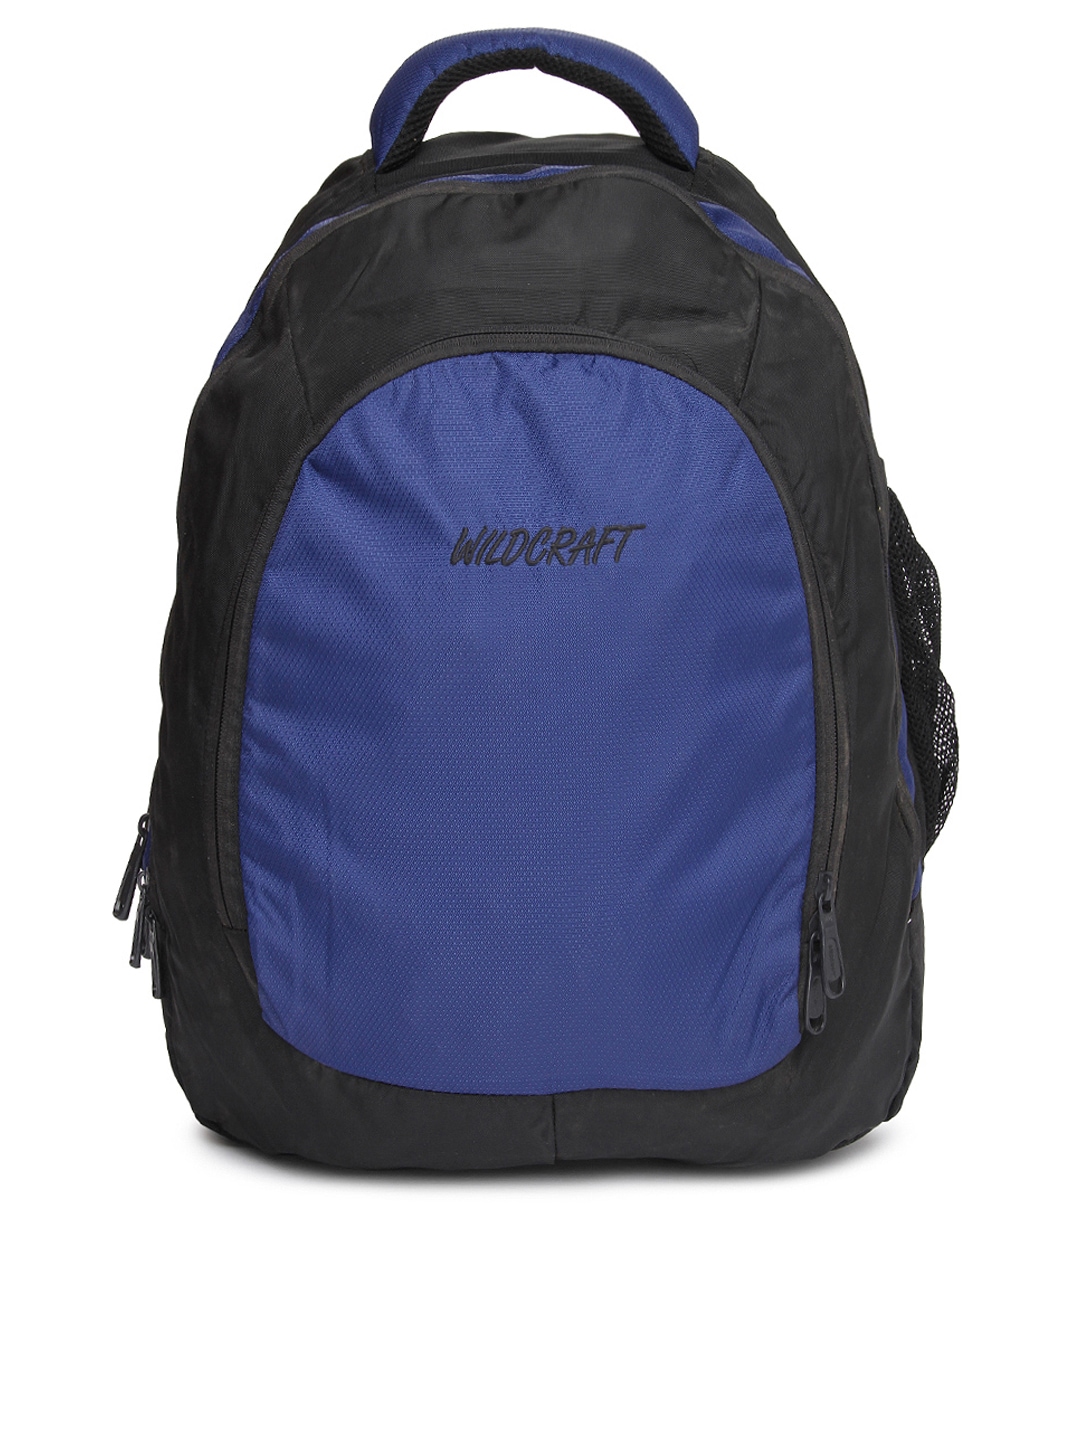 Wildcraft Unisex Black & Blue Corporate Backpack